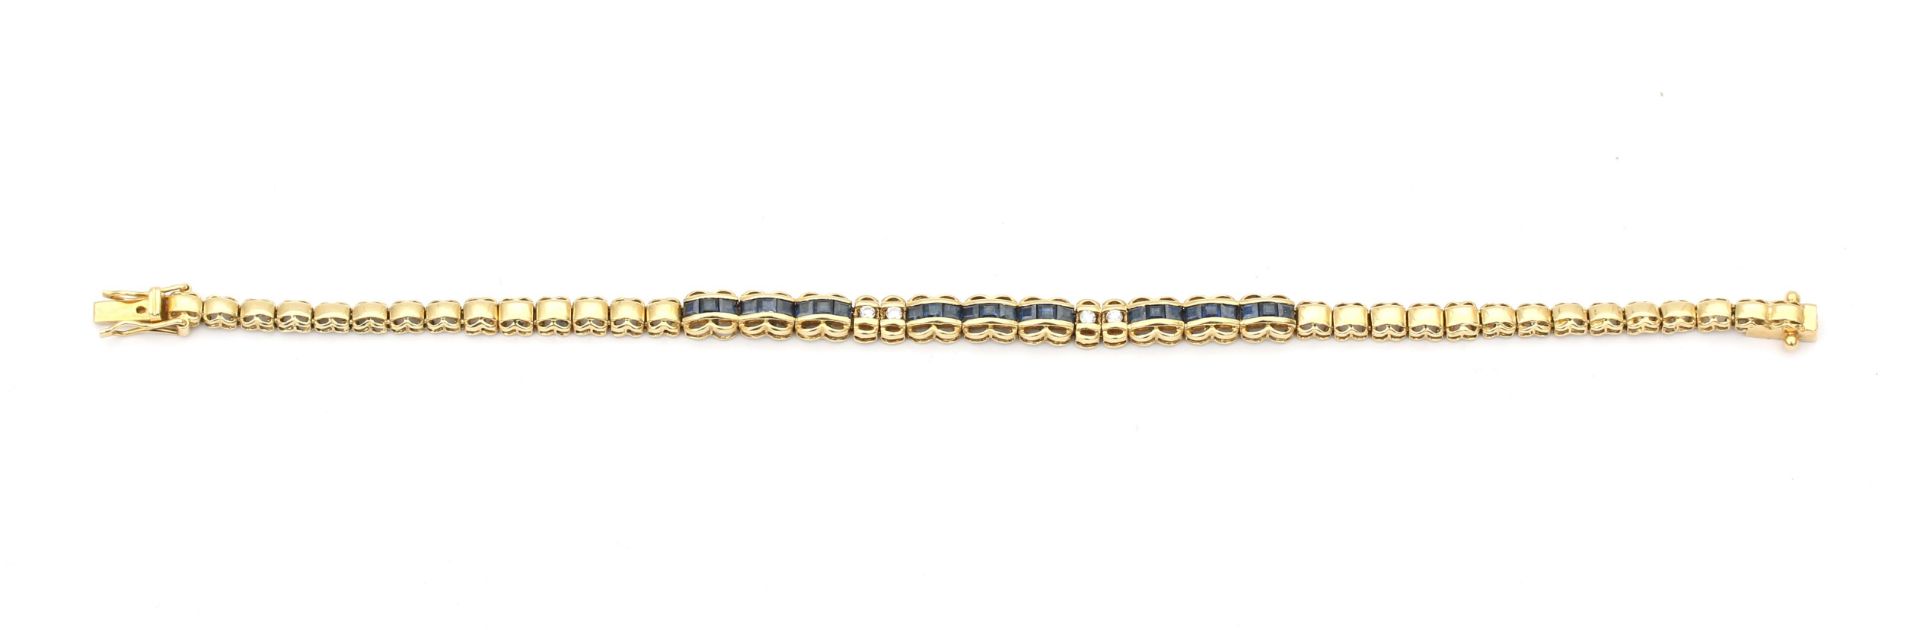 An 18 karat gold sapphire and diamond bracelet - Image 2 of 2